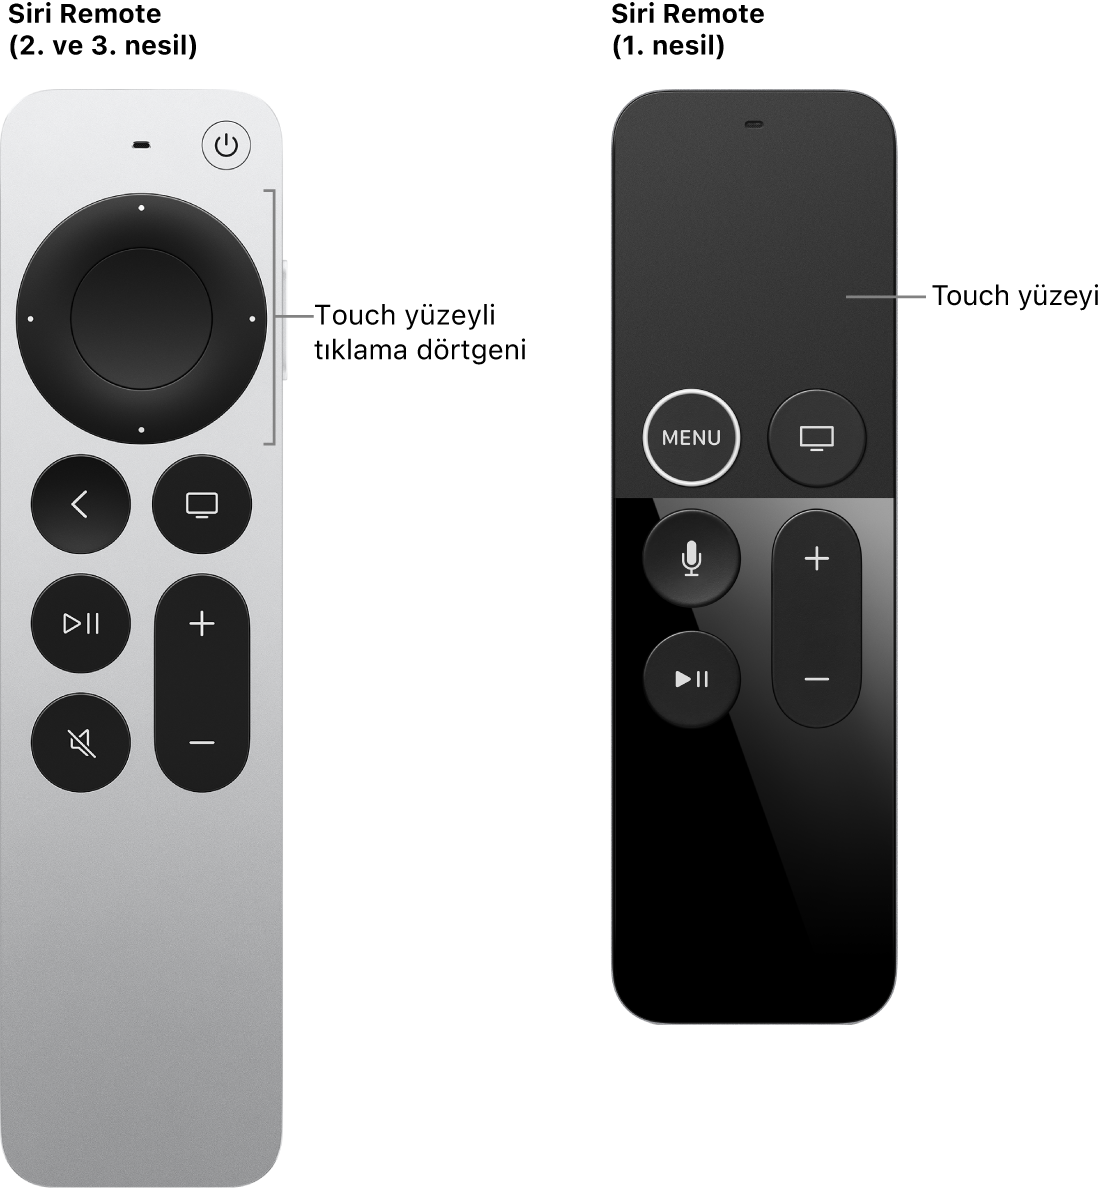 Tıklama dörtgenine sahip Siri Remote (2. ve 3. nesil) ve dokunma yüzeyine sahip Siri Remote (1. nesil)